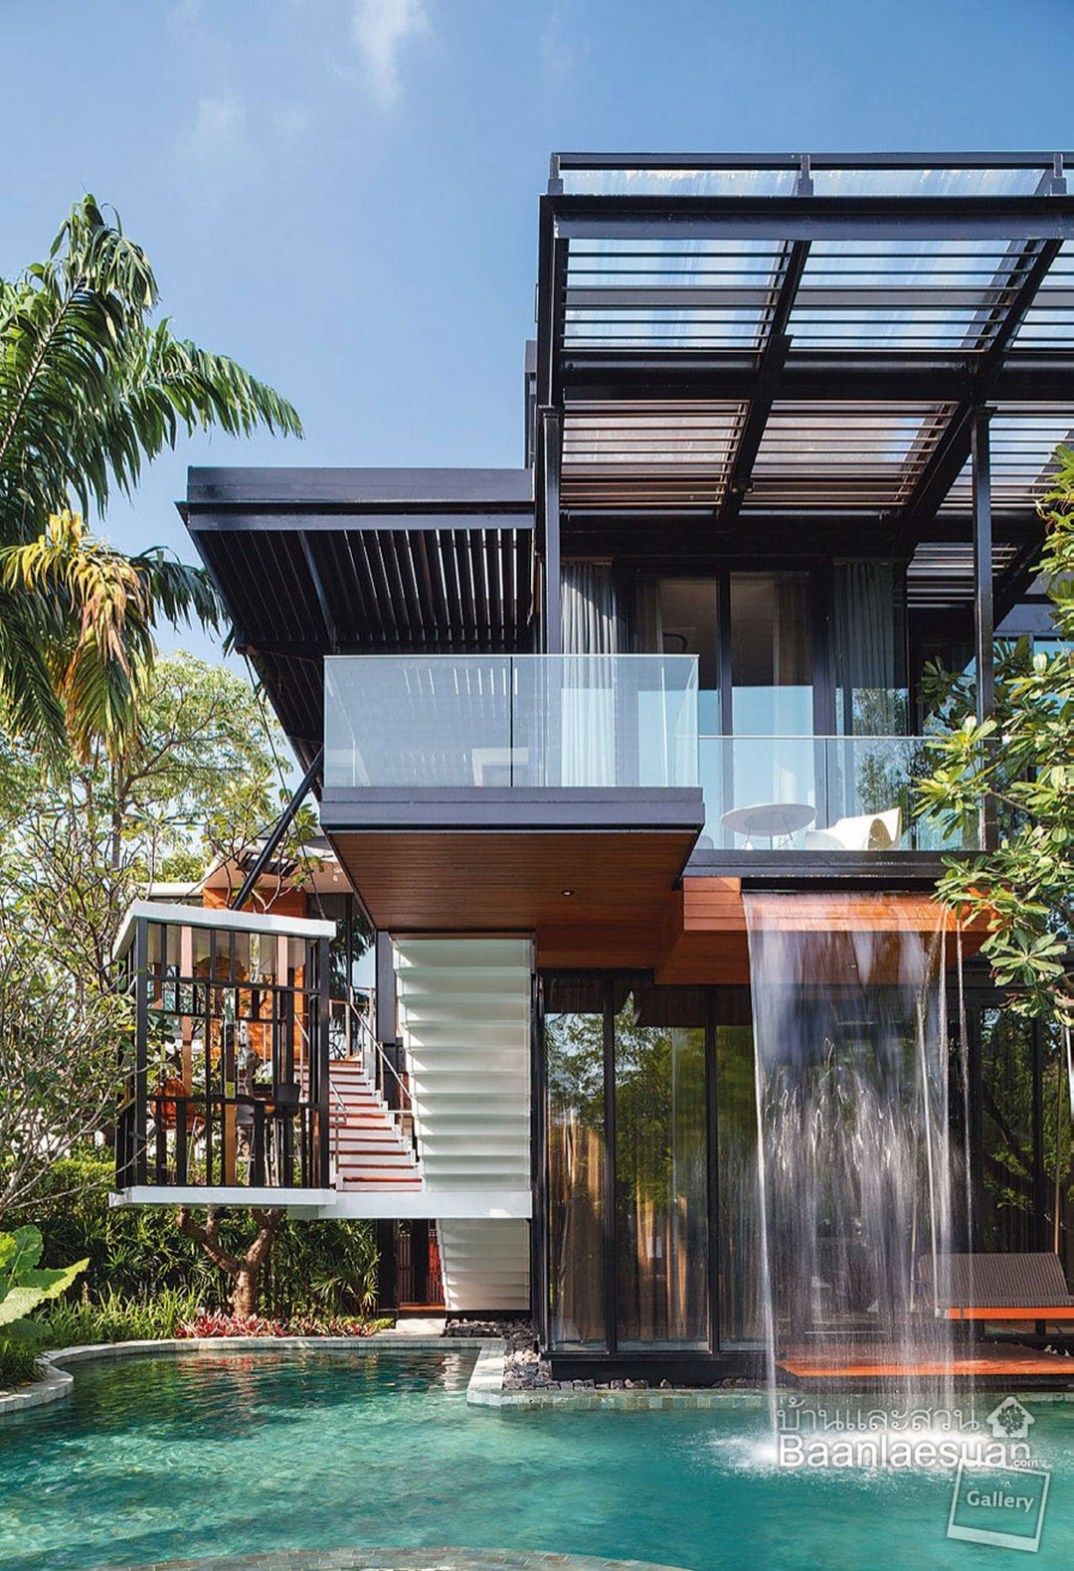 Marvelous Modern House Architecture
Design Ideas